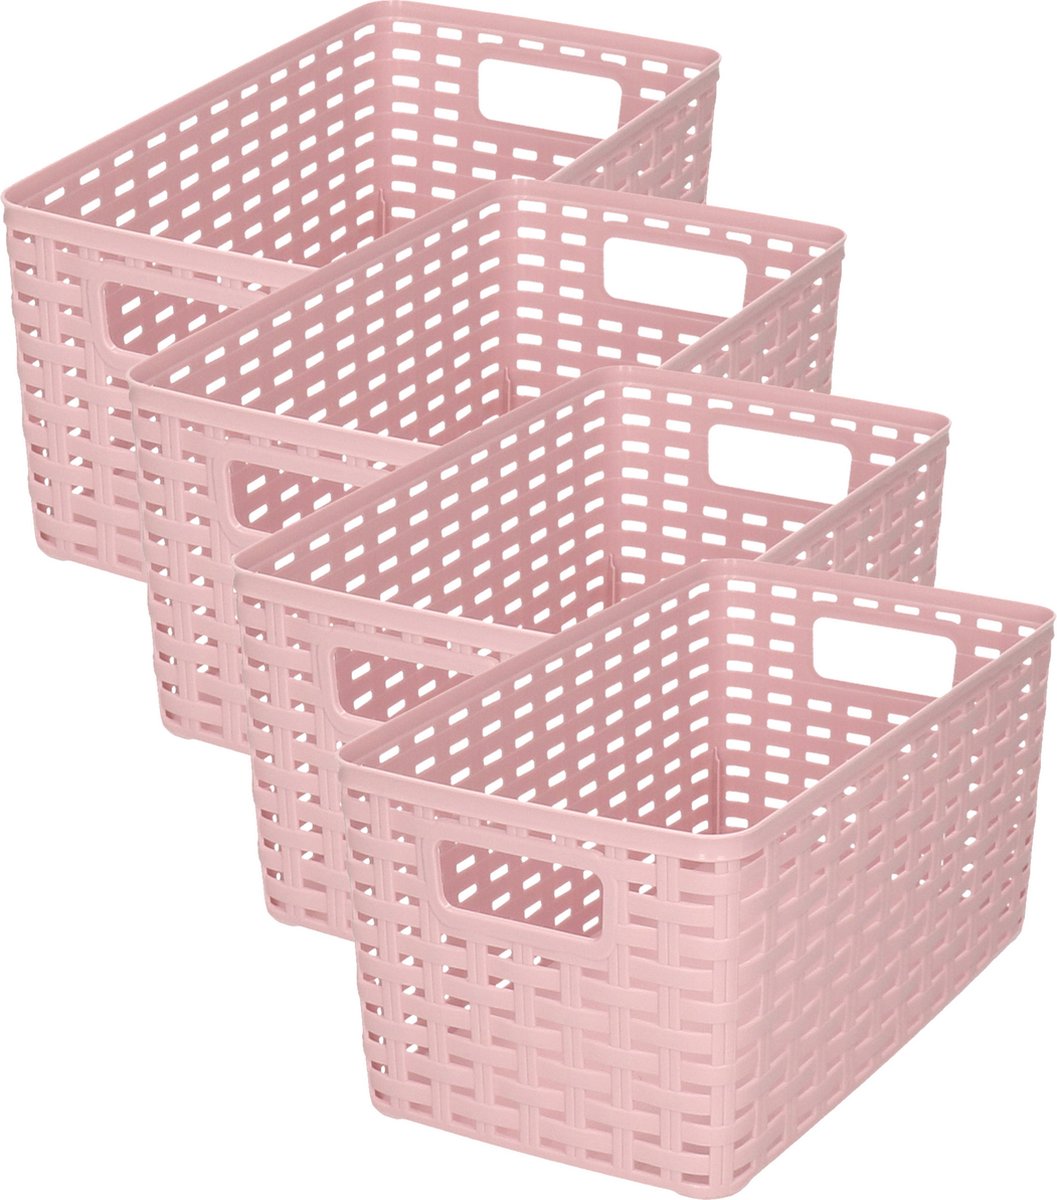 PlasticForte Opbergmand - 4x - Kastmand - rotan kunststof - oud roze - 5 Liter - 15 x 28 x 13 cm